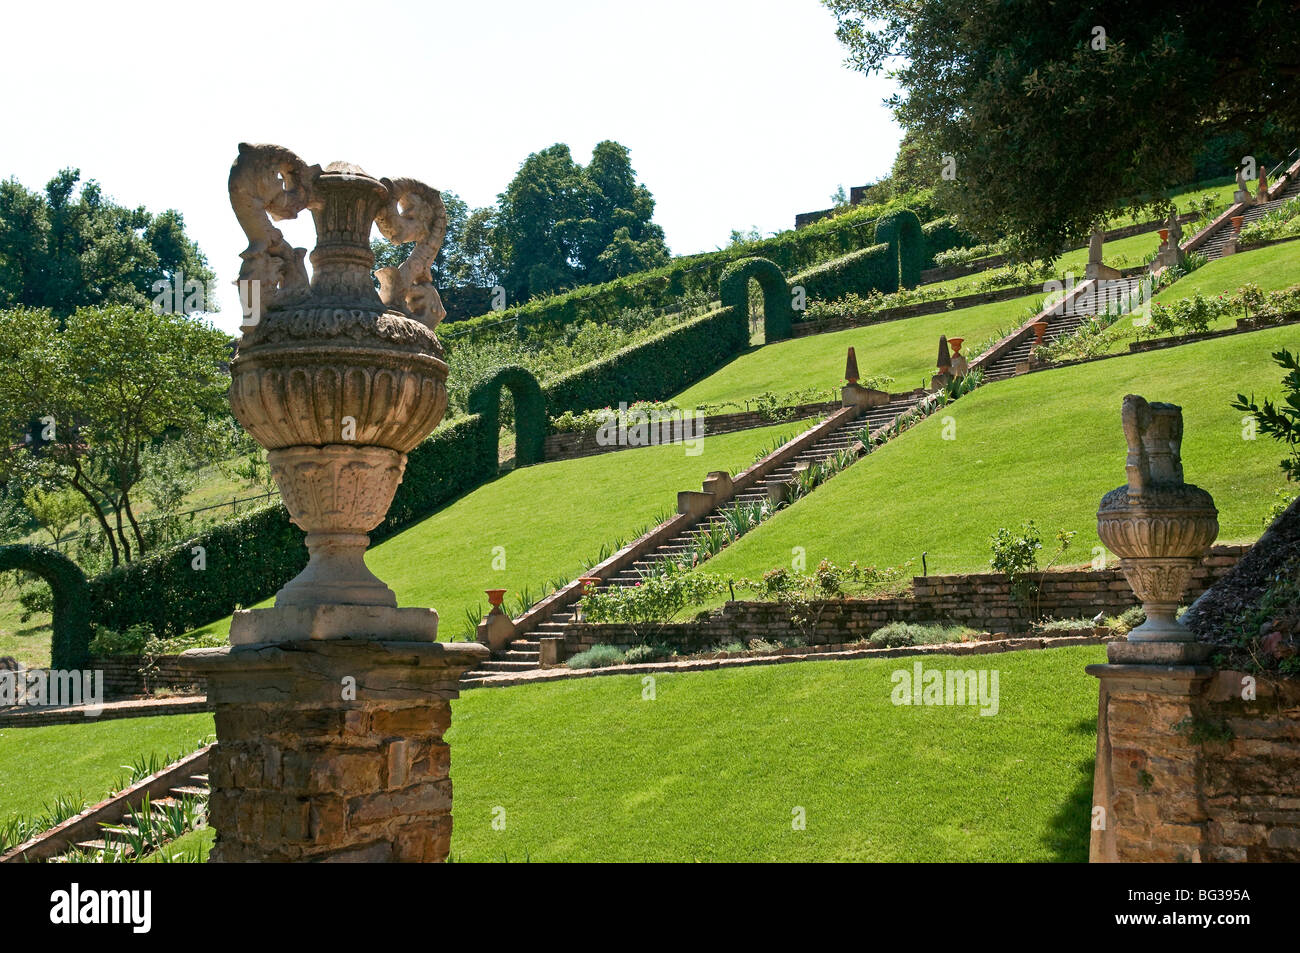 Le jardin Bardini, Florence (Firenze), Toscane, Italie, Europe Banque D'Images